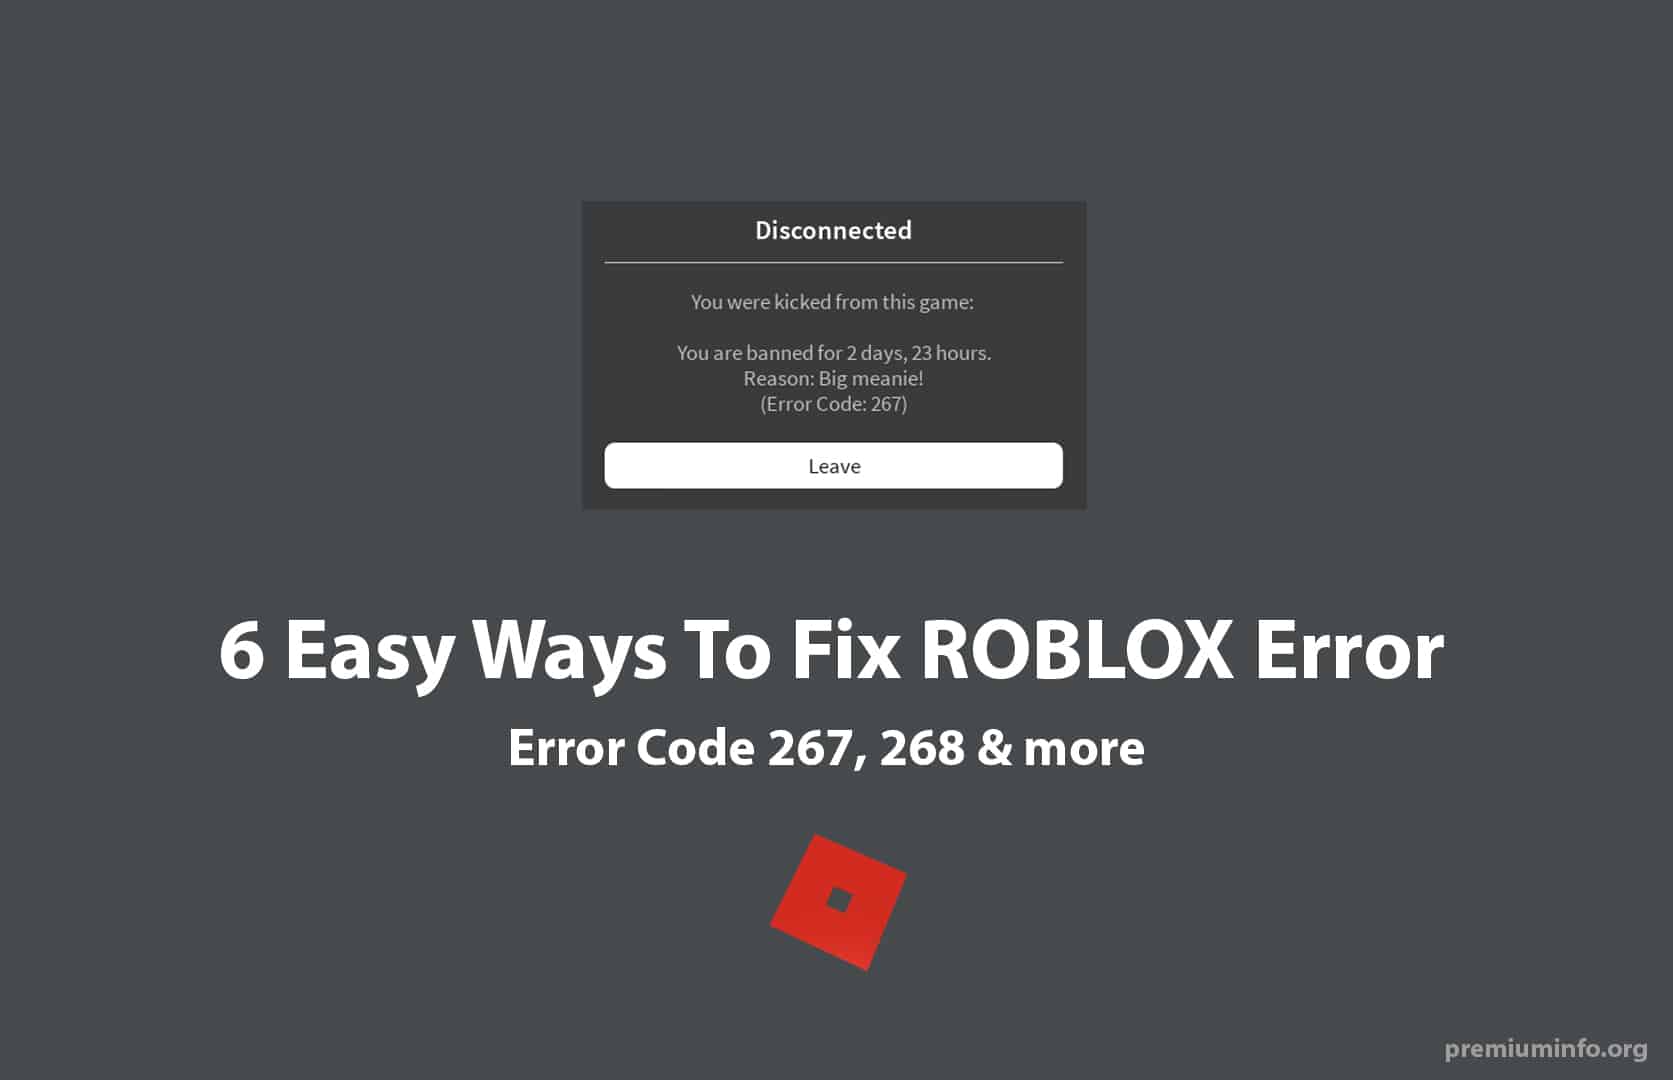 Fixed 6 Ways To Fix Roblox Error Code 267 Premiuminfo - roblox codes page 267